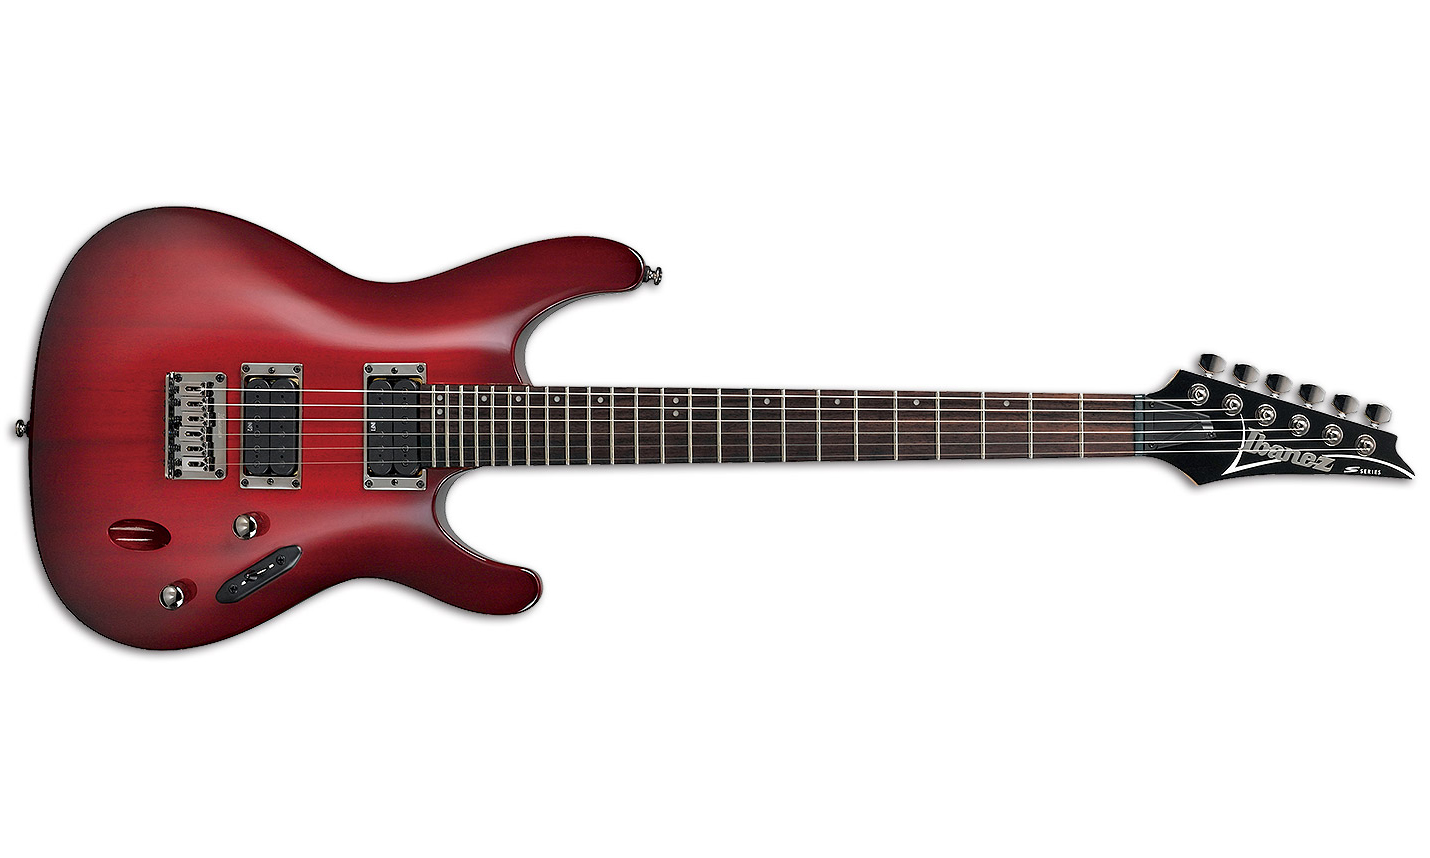 Ibanez S521 Bbs Standard Hh Ht Jat - Blackberry Sunburst - Guitarra eléctrica con forma de str. - Variation 1